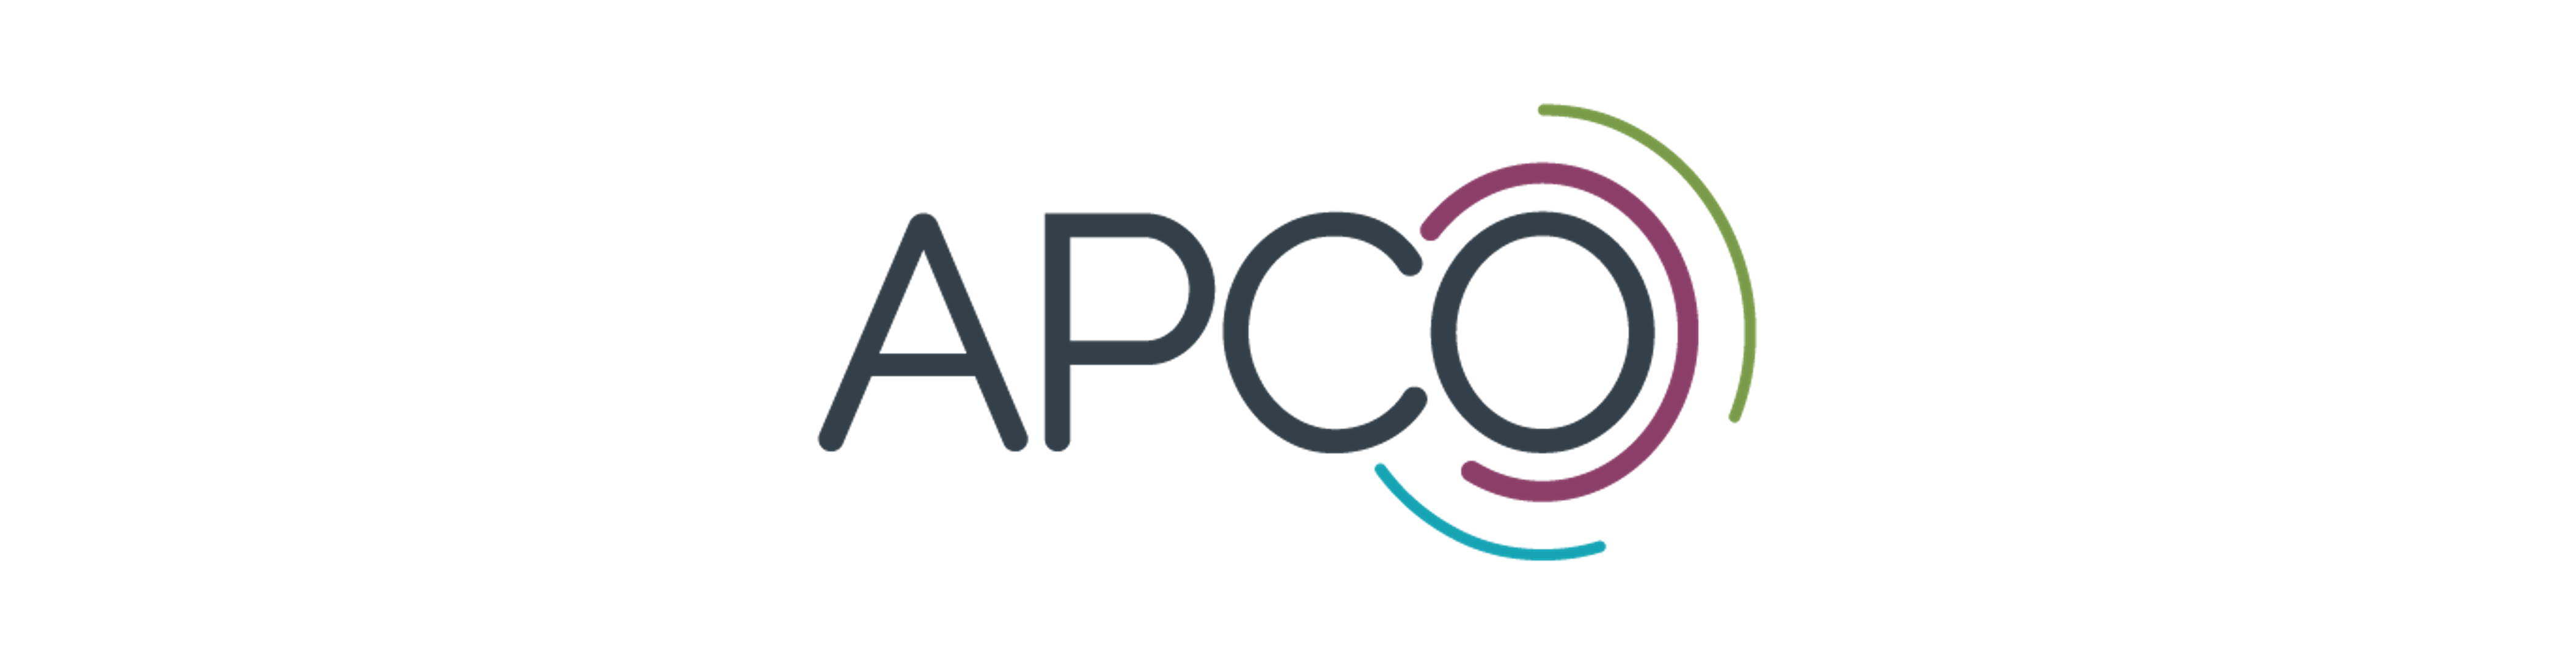 Apco logo